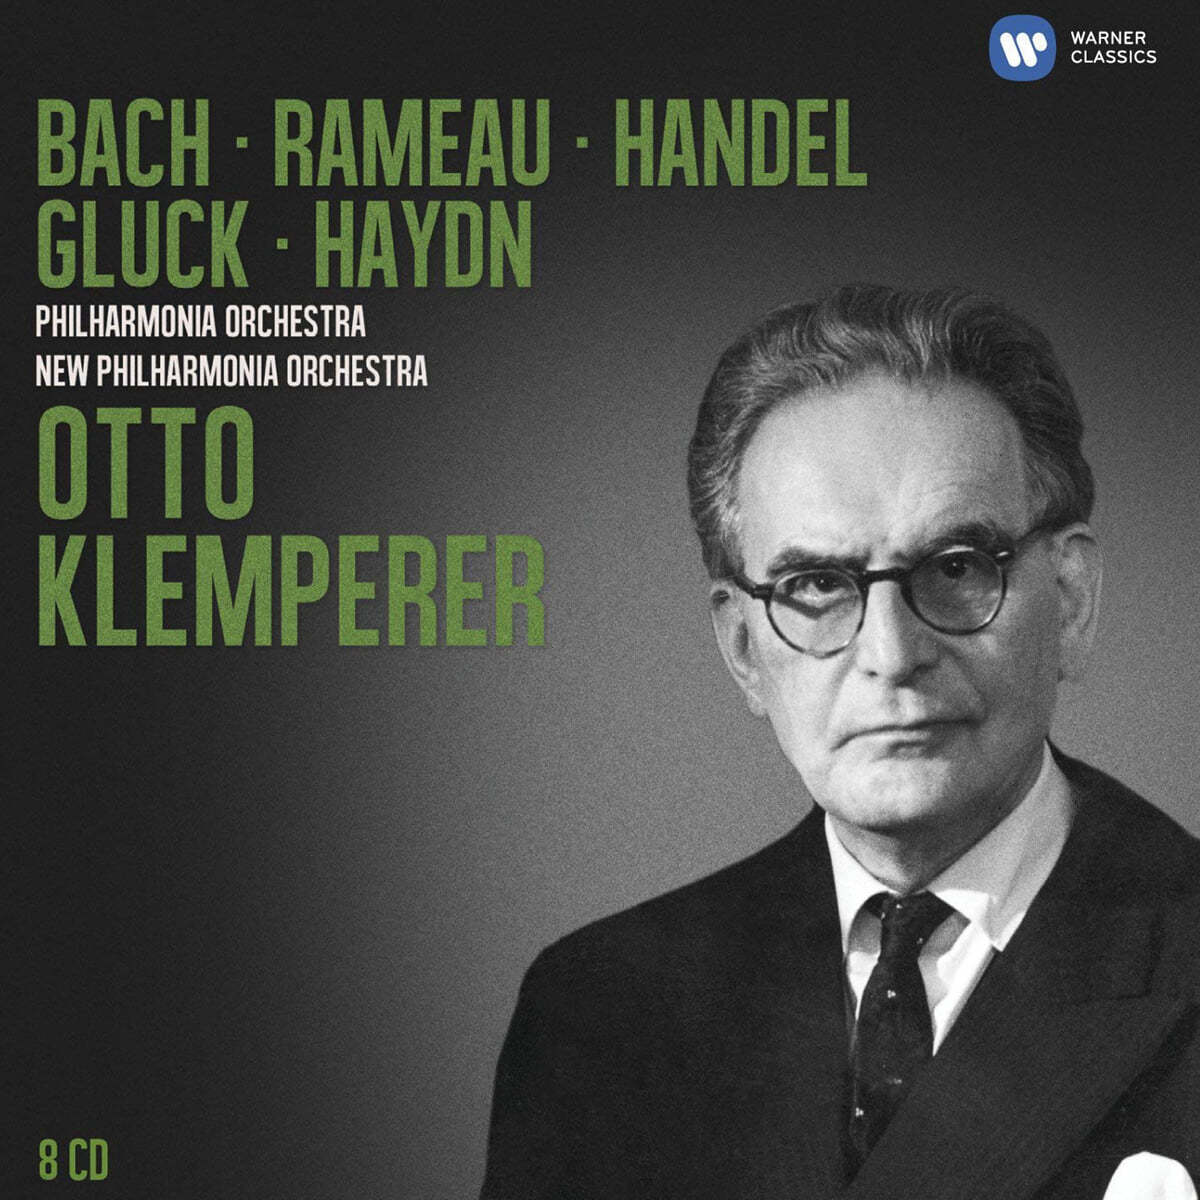 Otto Klemperer 관현악과 교향곡 - 바흐 / 라모 / 헨델 / 글룩 / 하이든 (Bach / Rameau / Handel / Gluck / Haydn) 오토 클렘페러